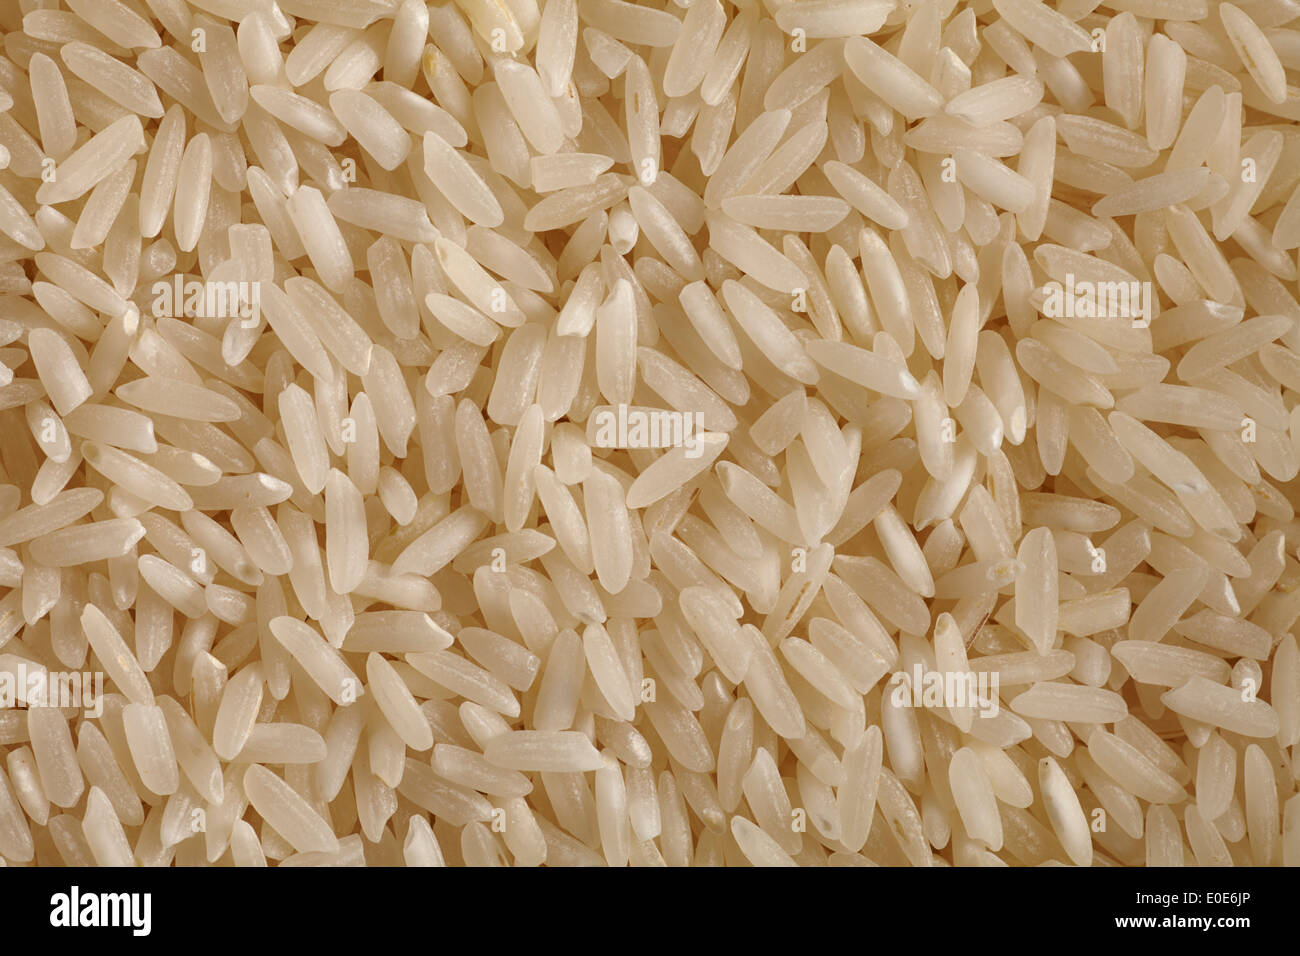 raw, uncooked long-grain white rice Stock Photo